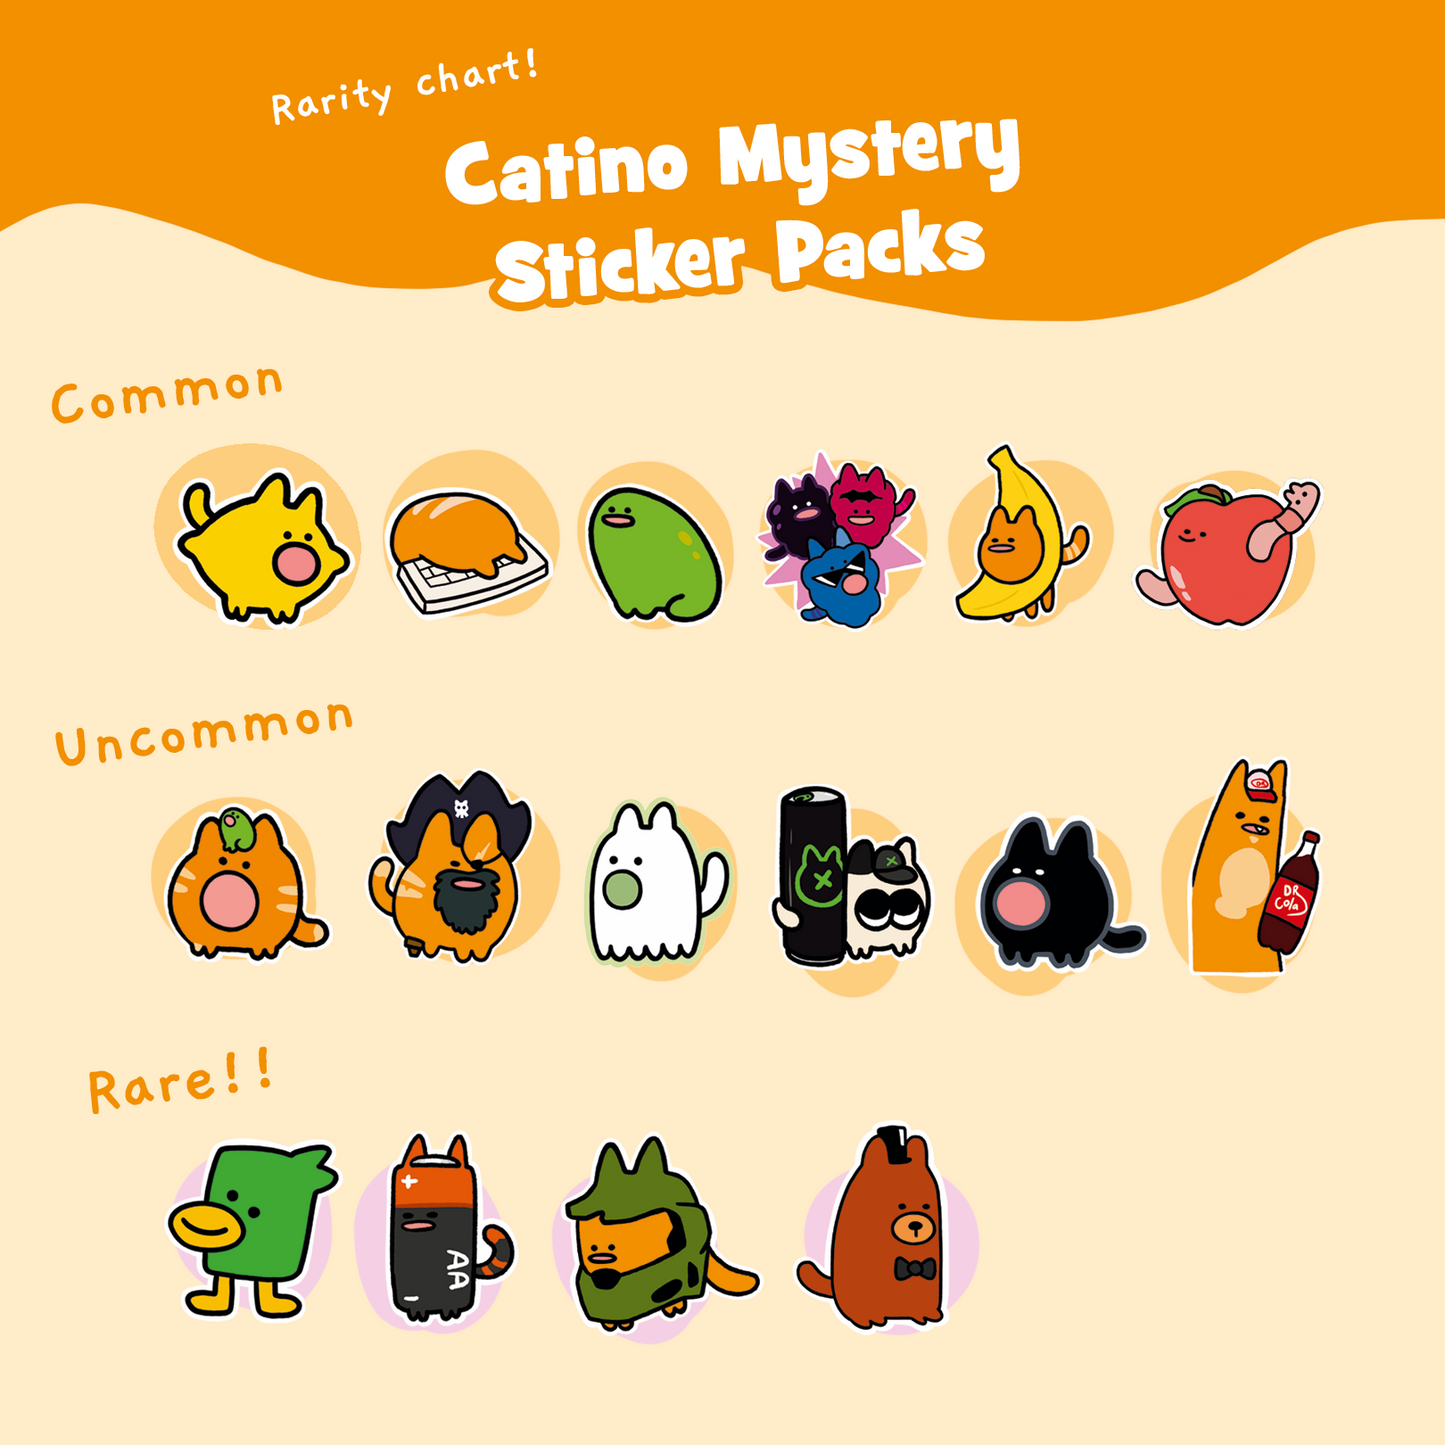 Catino MYSTERY Sticker Pack!